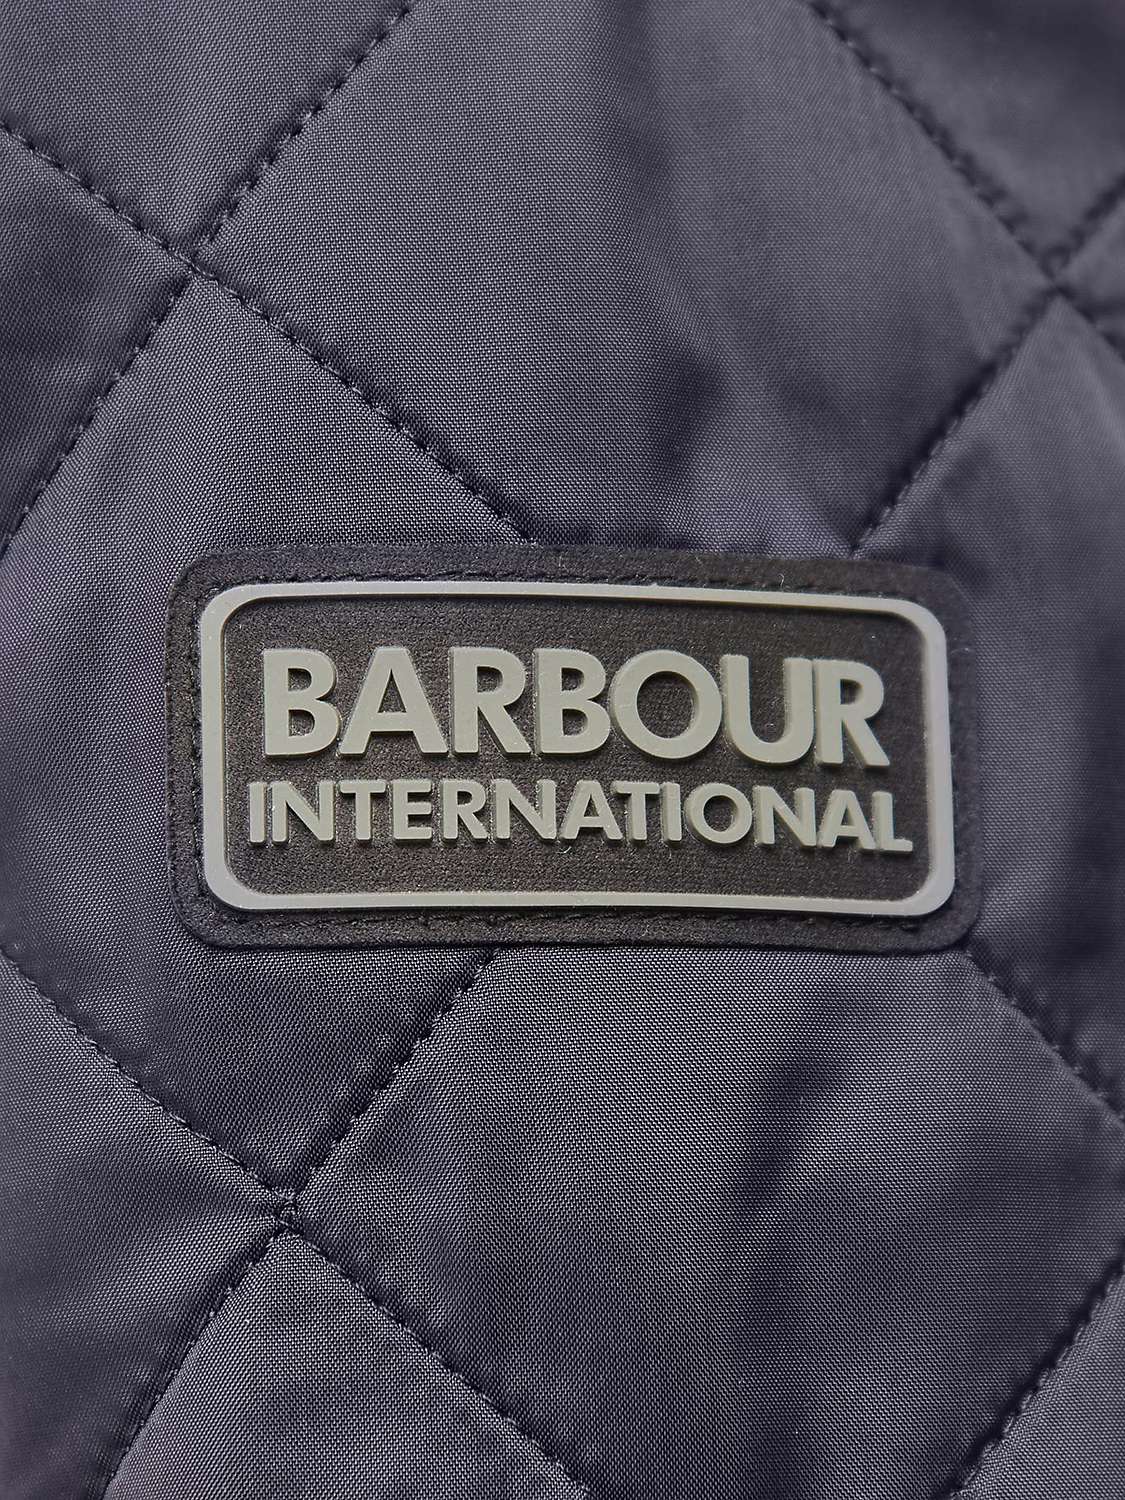 Buy Barbour International Tourer Ariel Polar Quilted Jacket, Navy Online at johnlewis.com